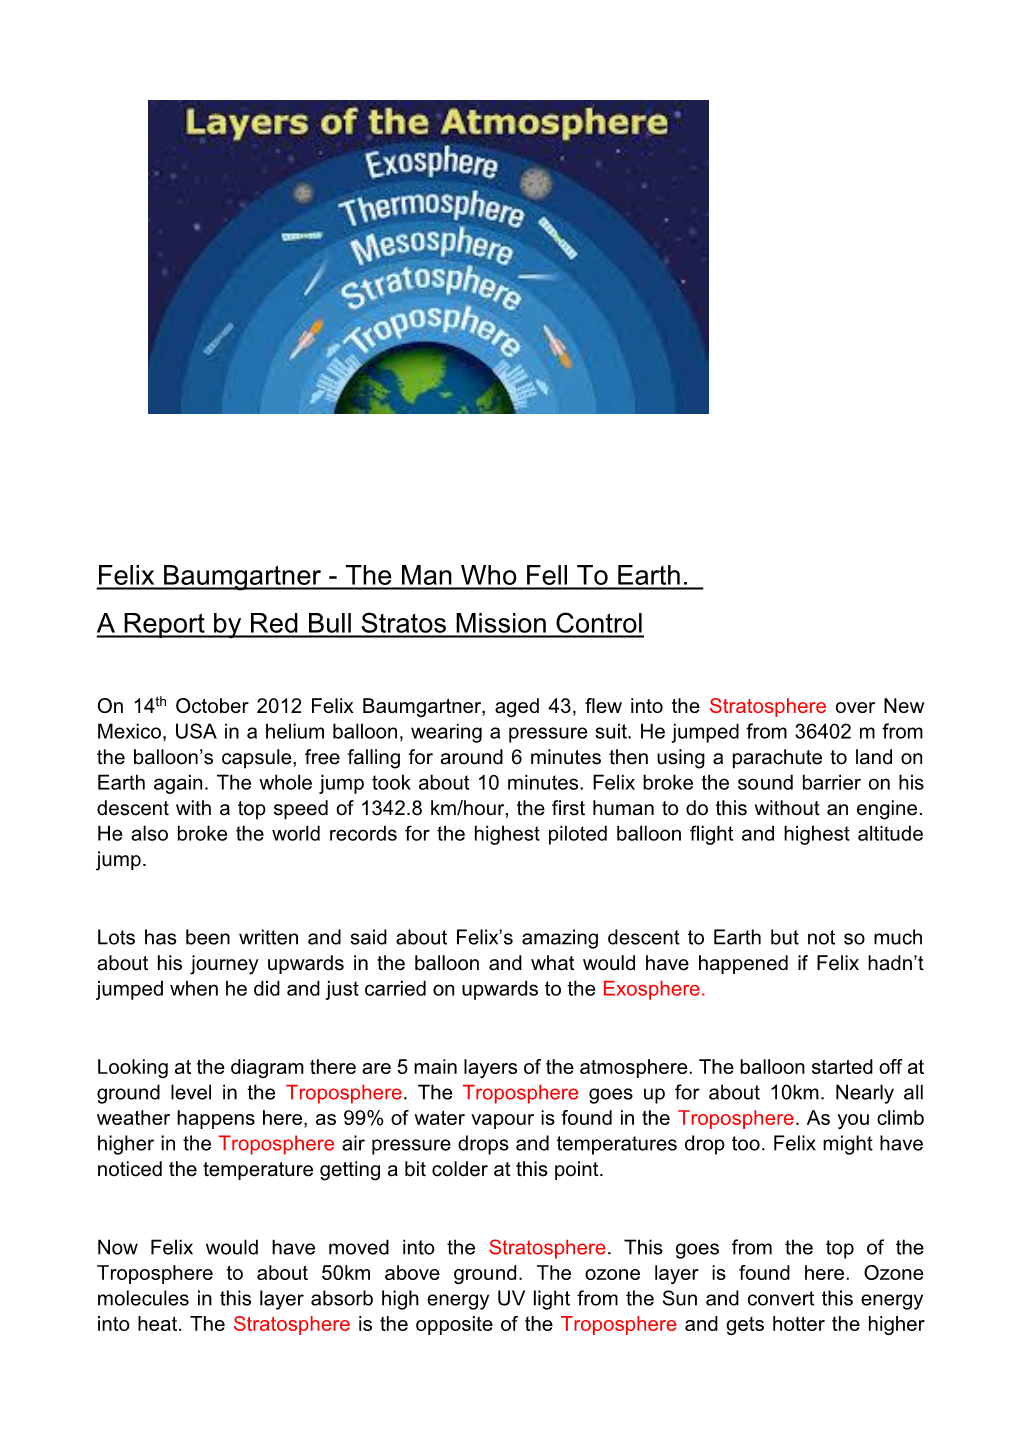 Felix Baumgartner - the Man Who Fell to Earth